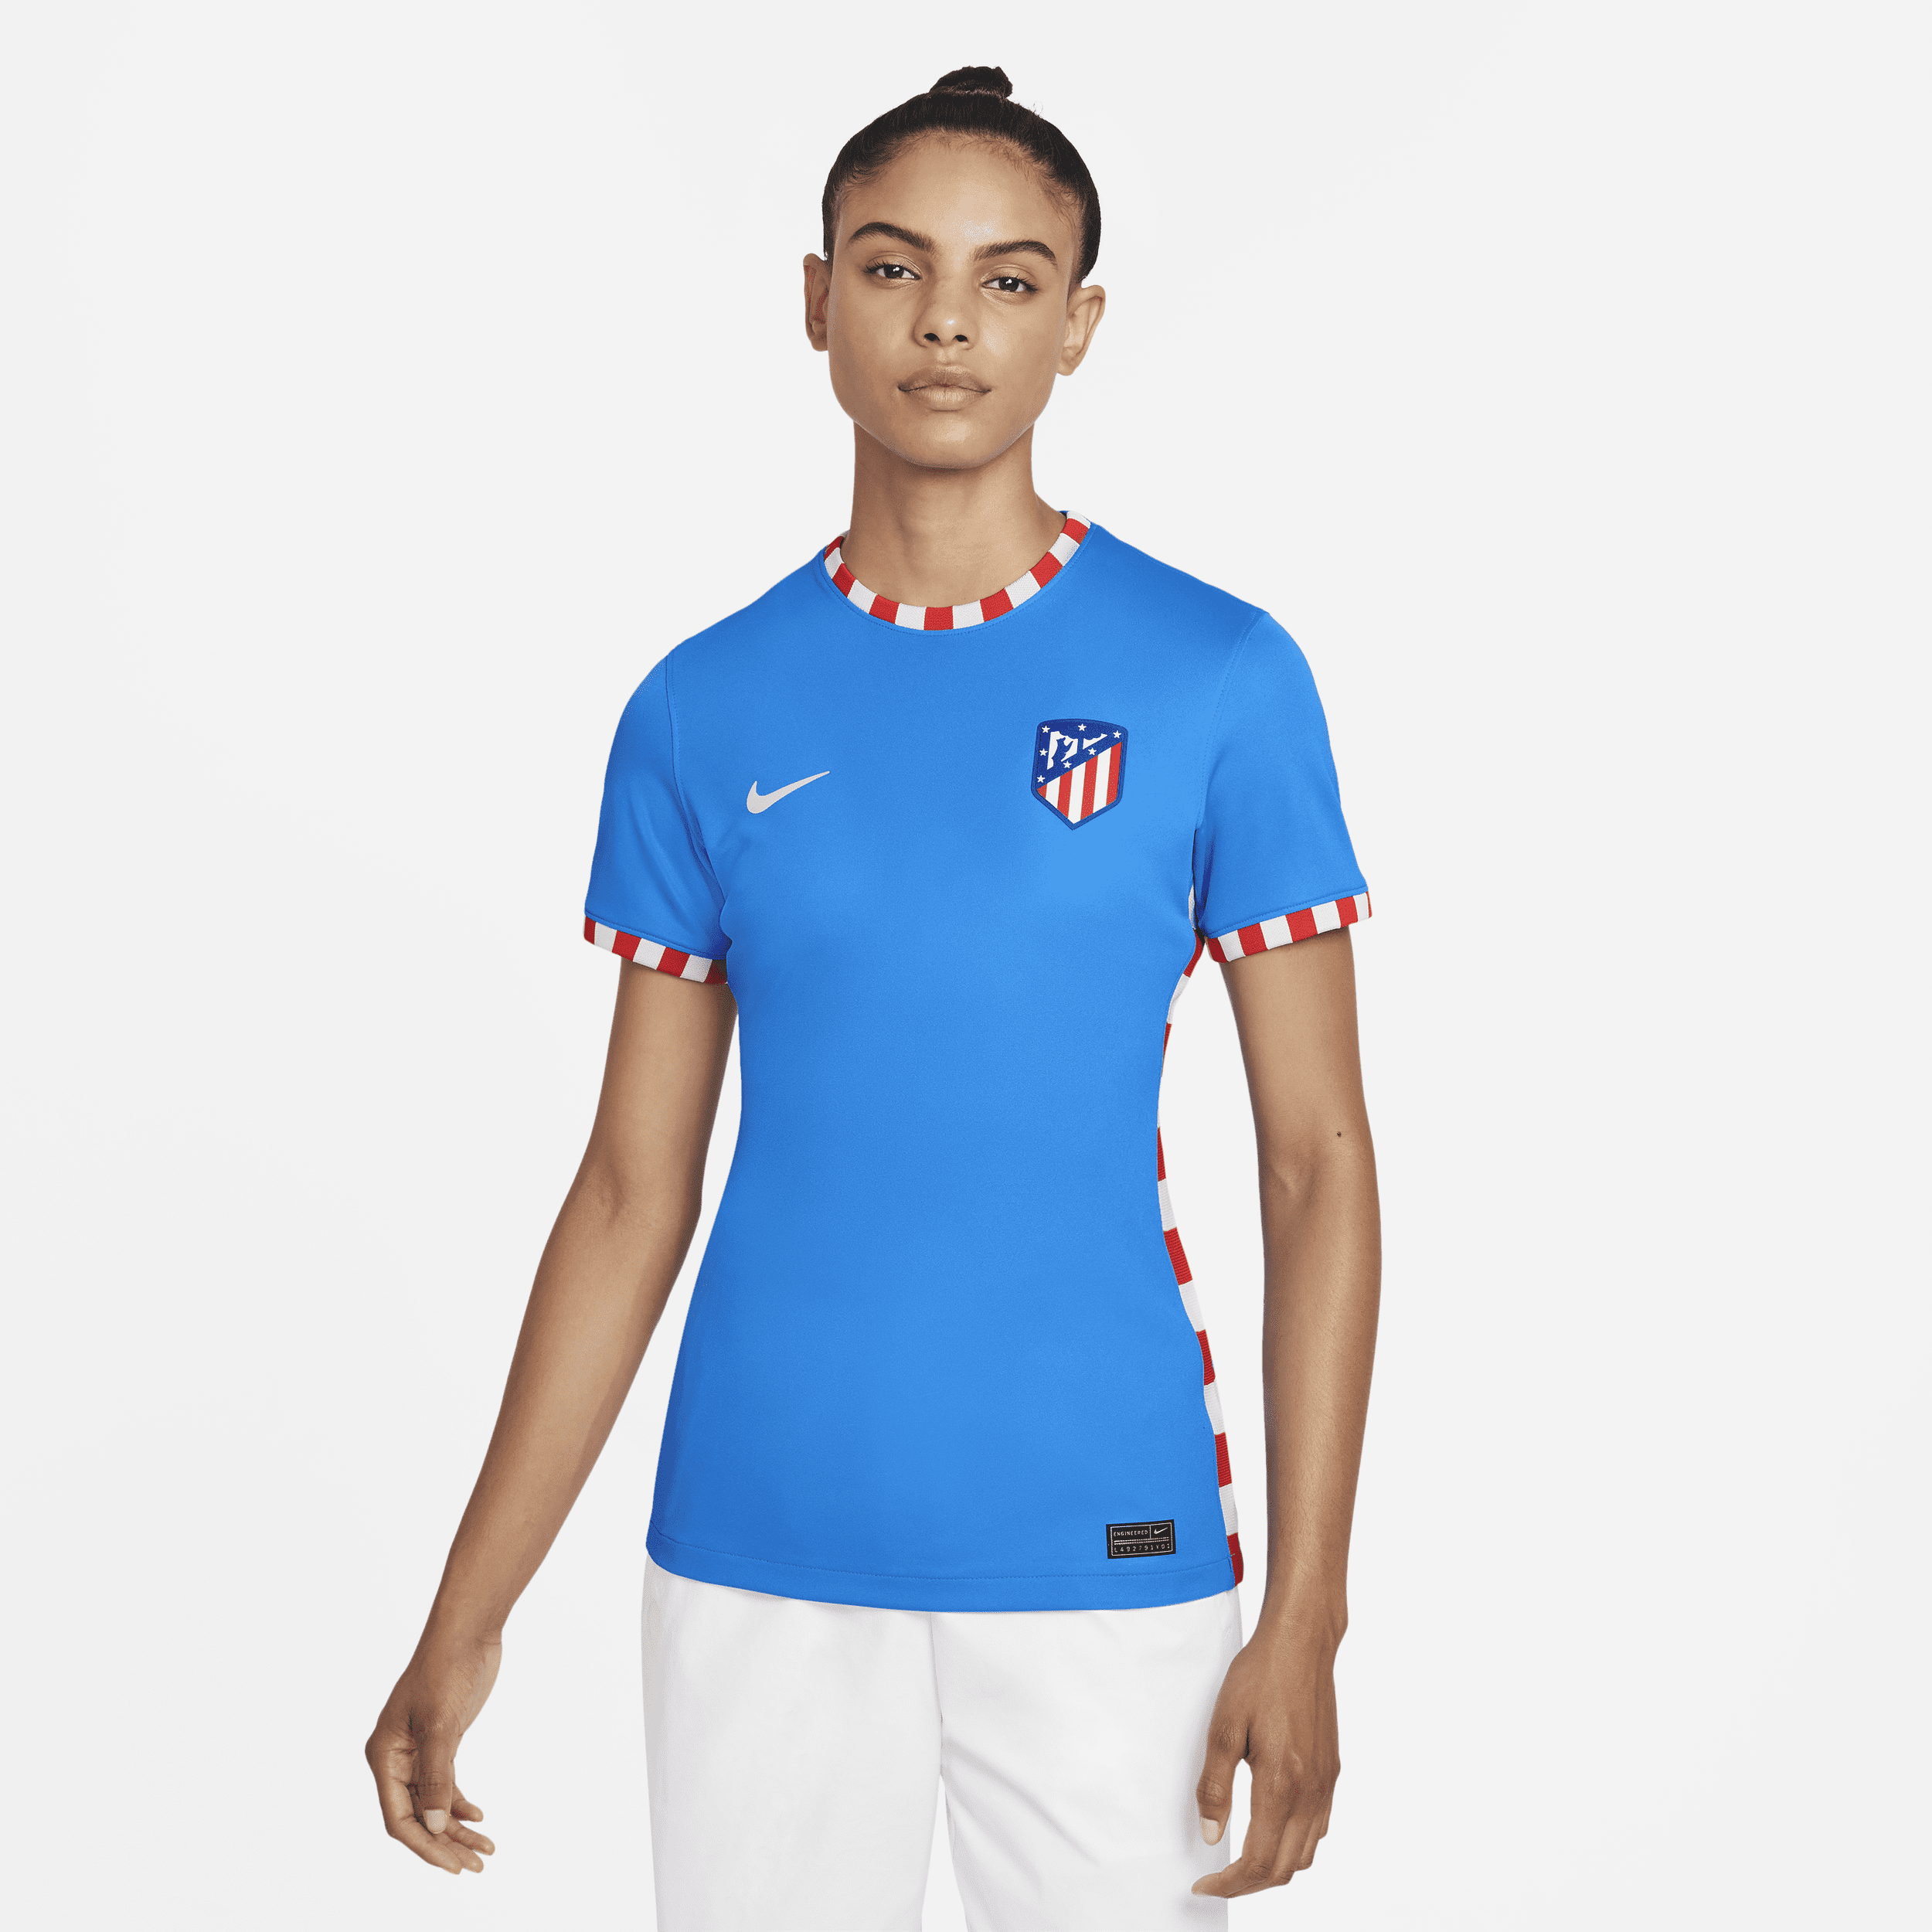 Camisola de futebol Nike Dri-FIT Stadium Atlético de Madrid 2021/22 para mulher - Azul